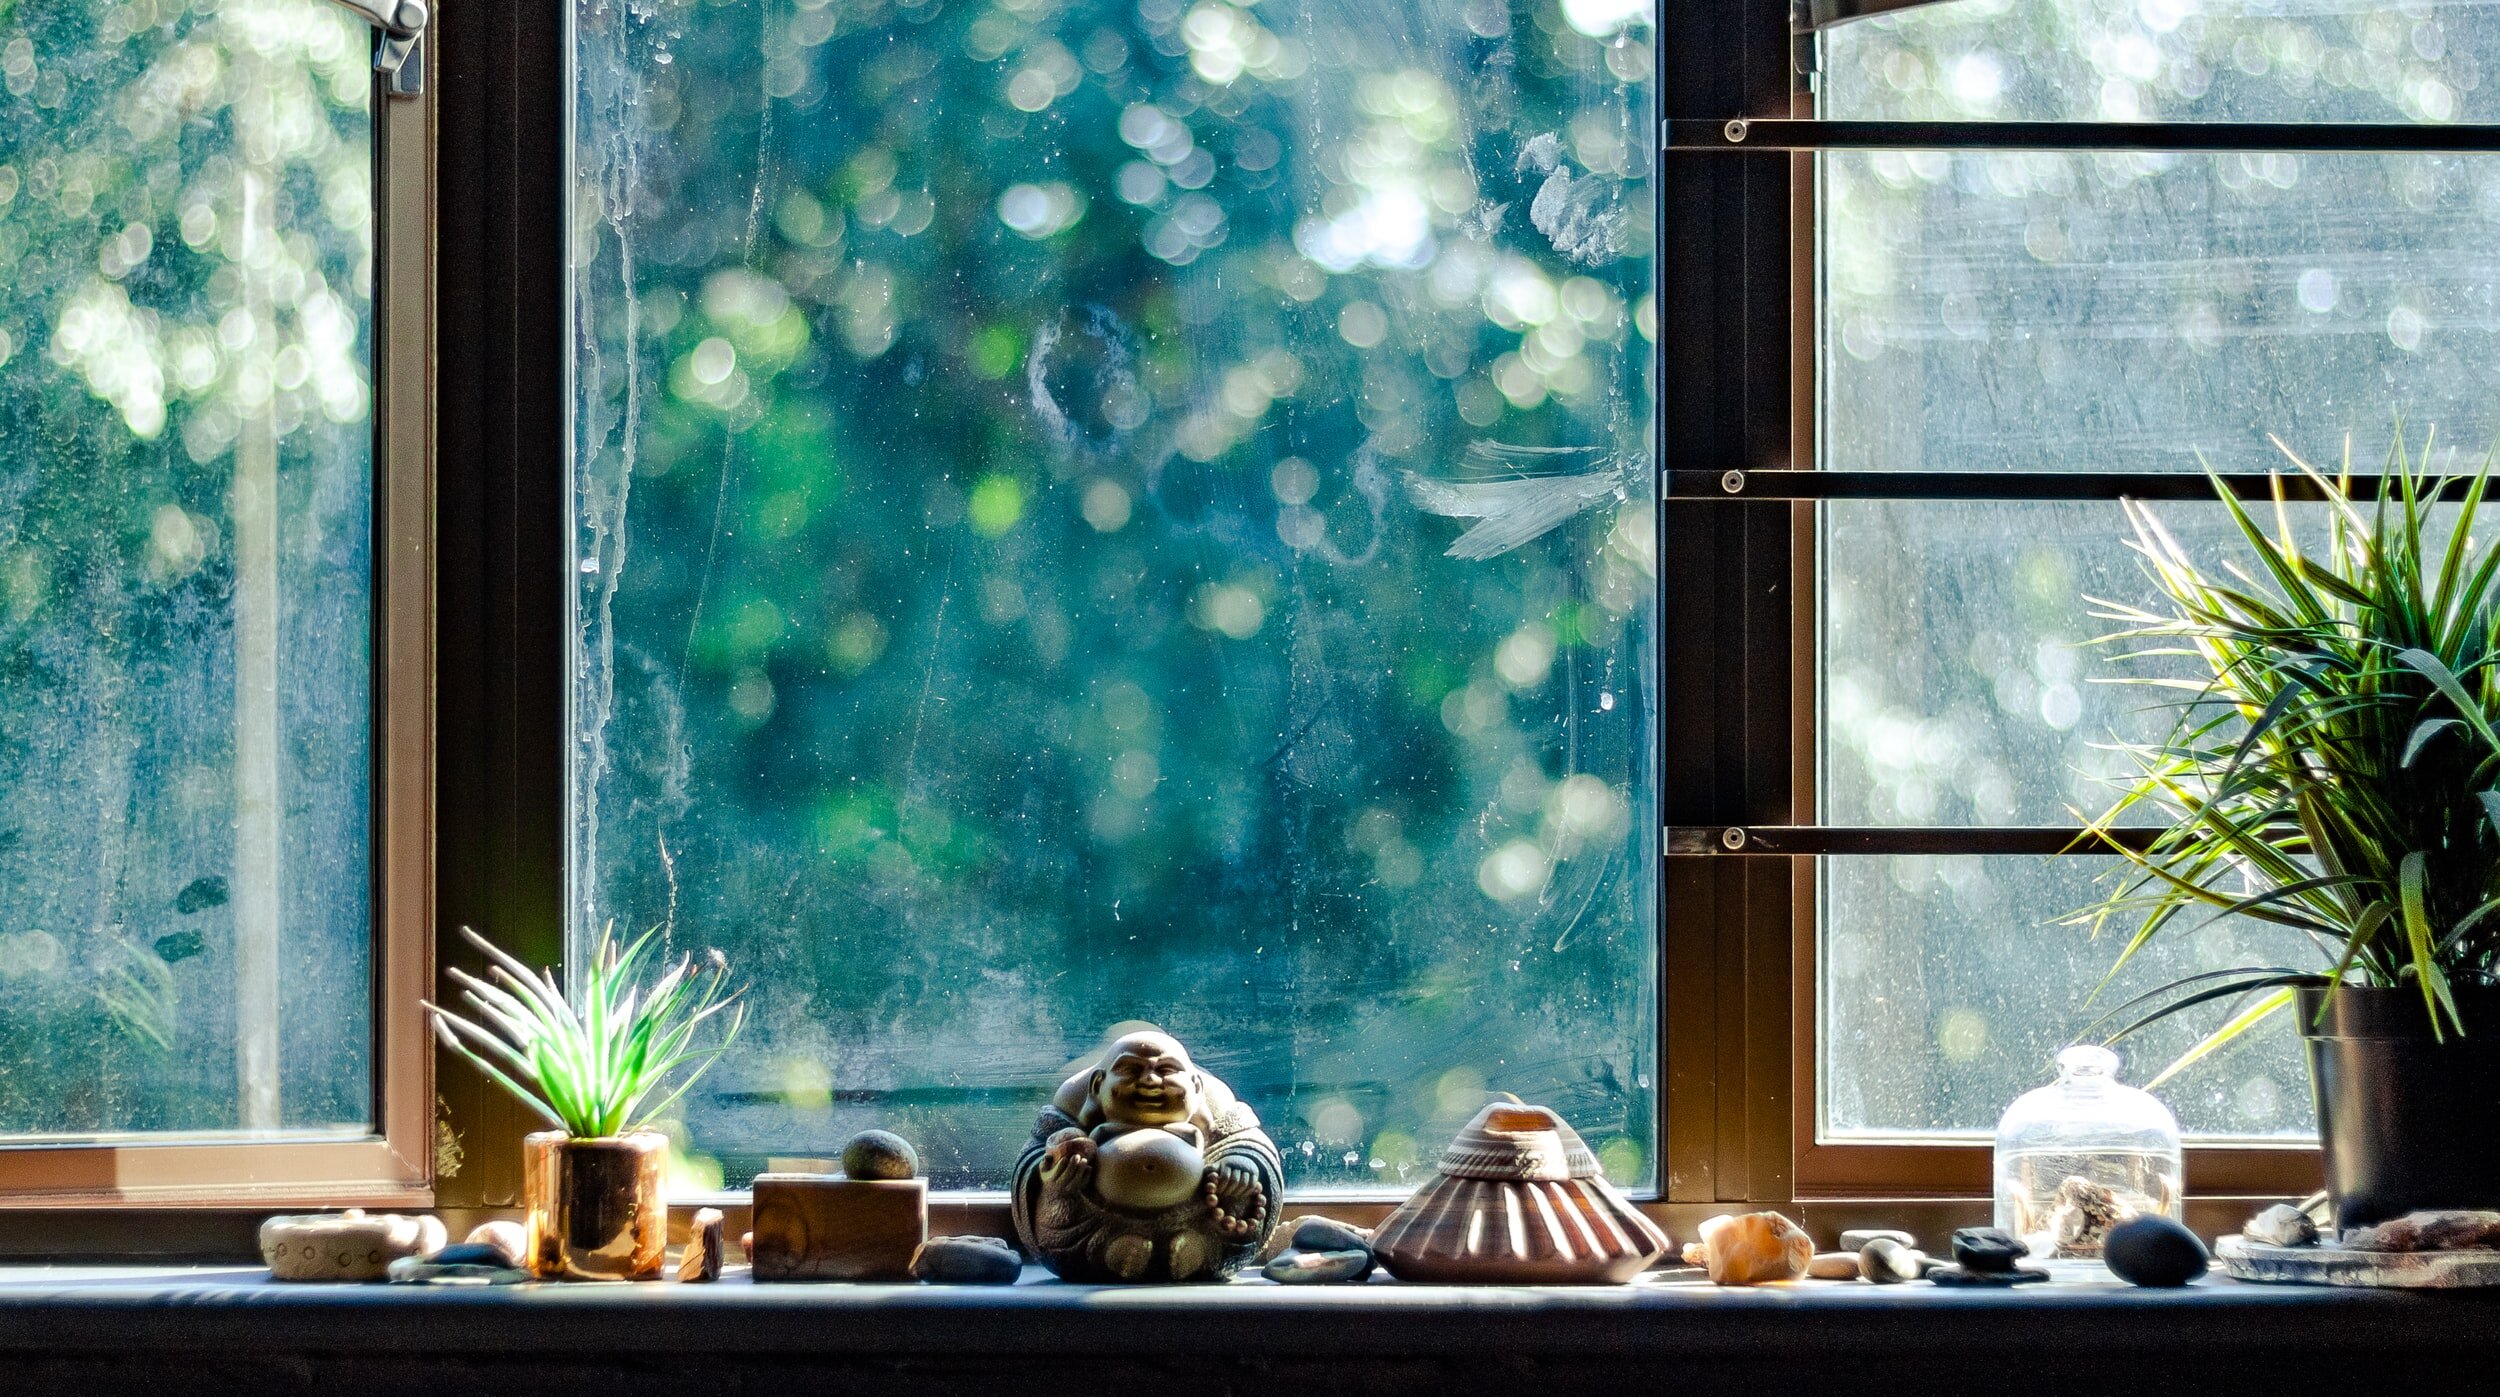 Ideas to Make Your Home Totally Zen